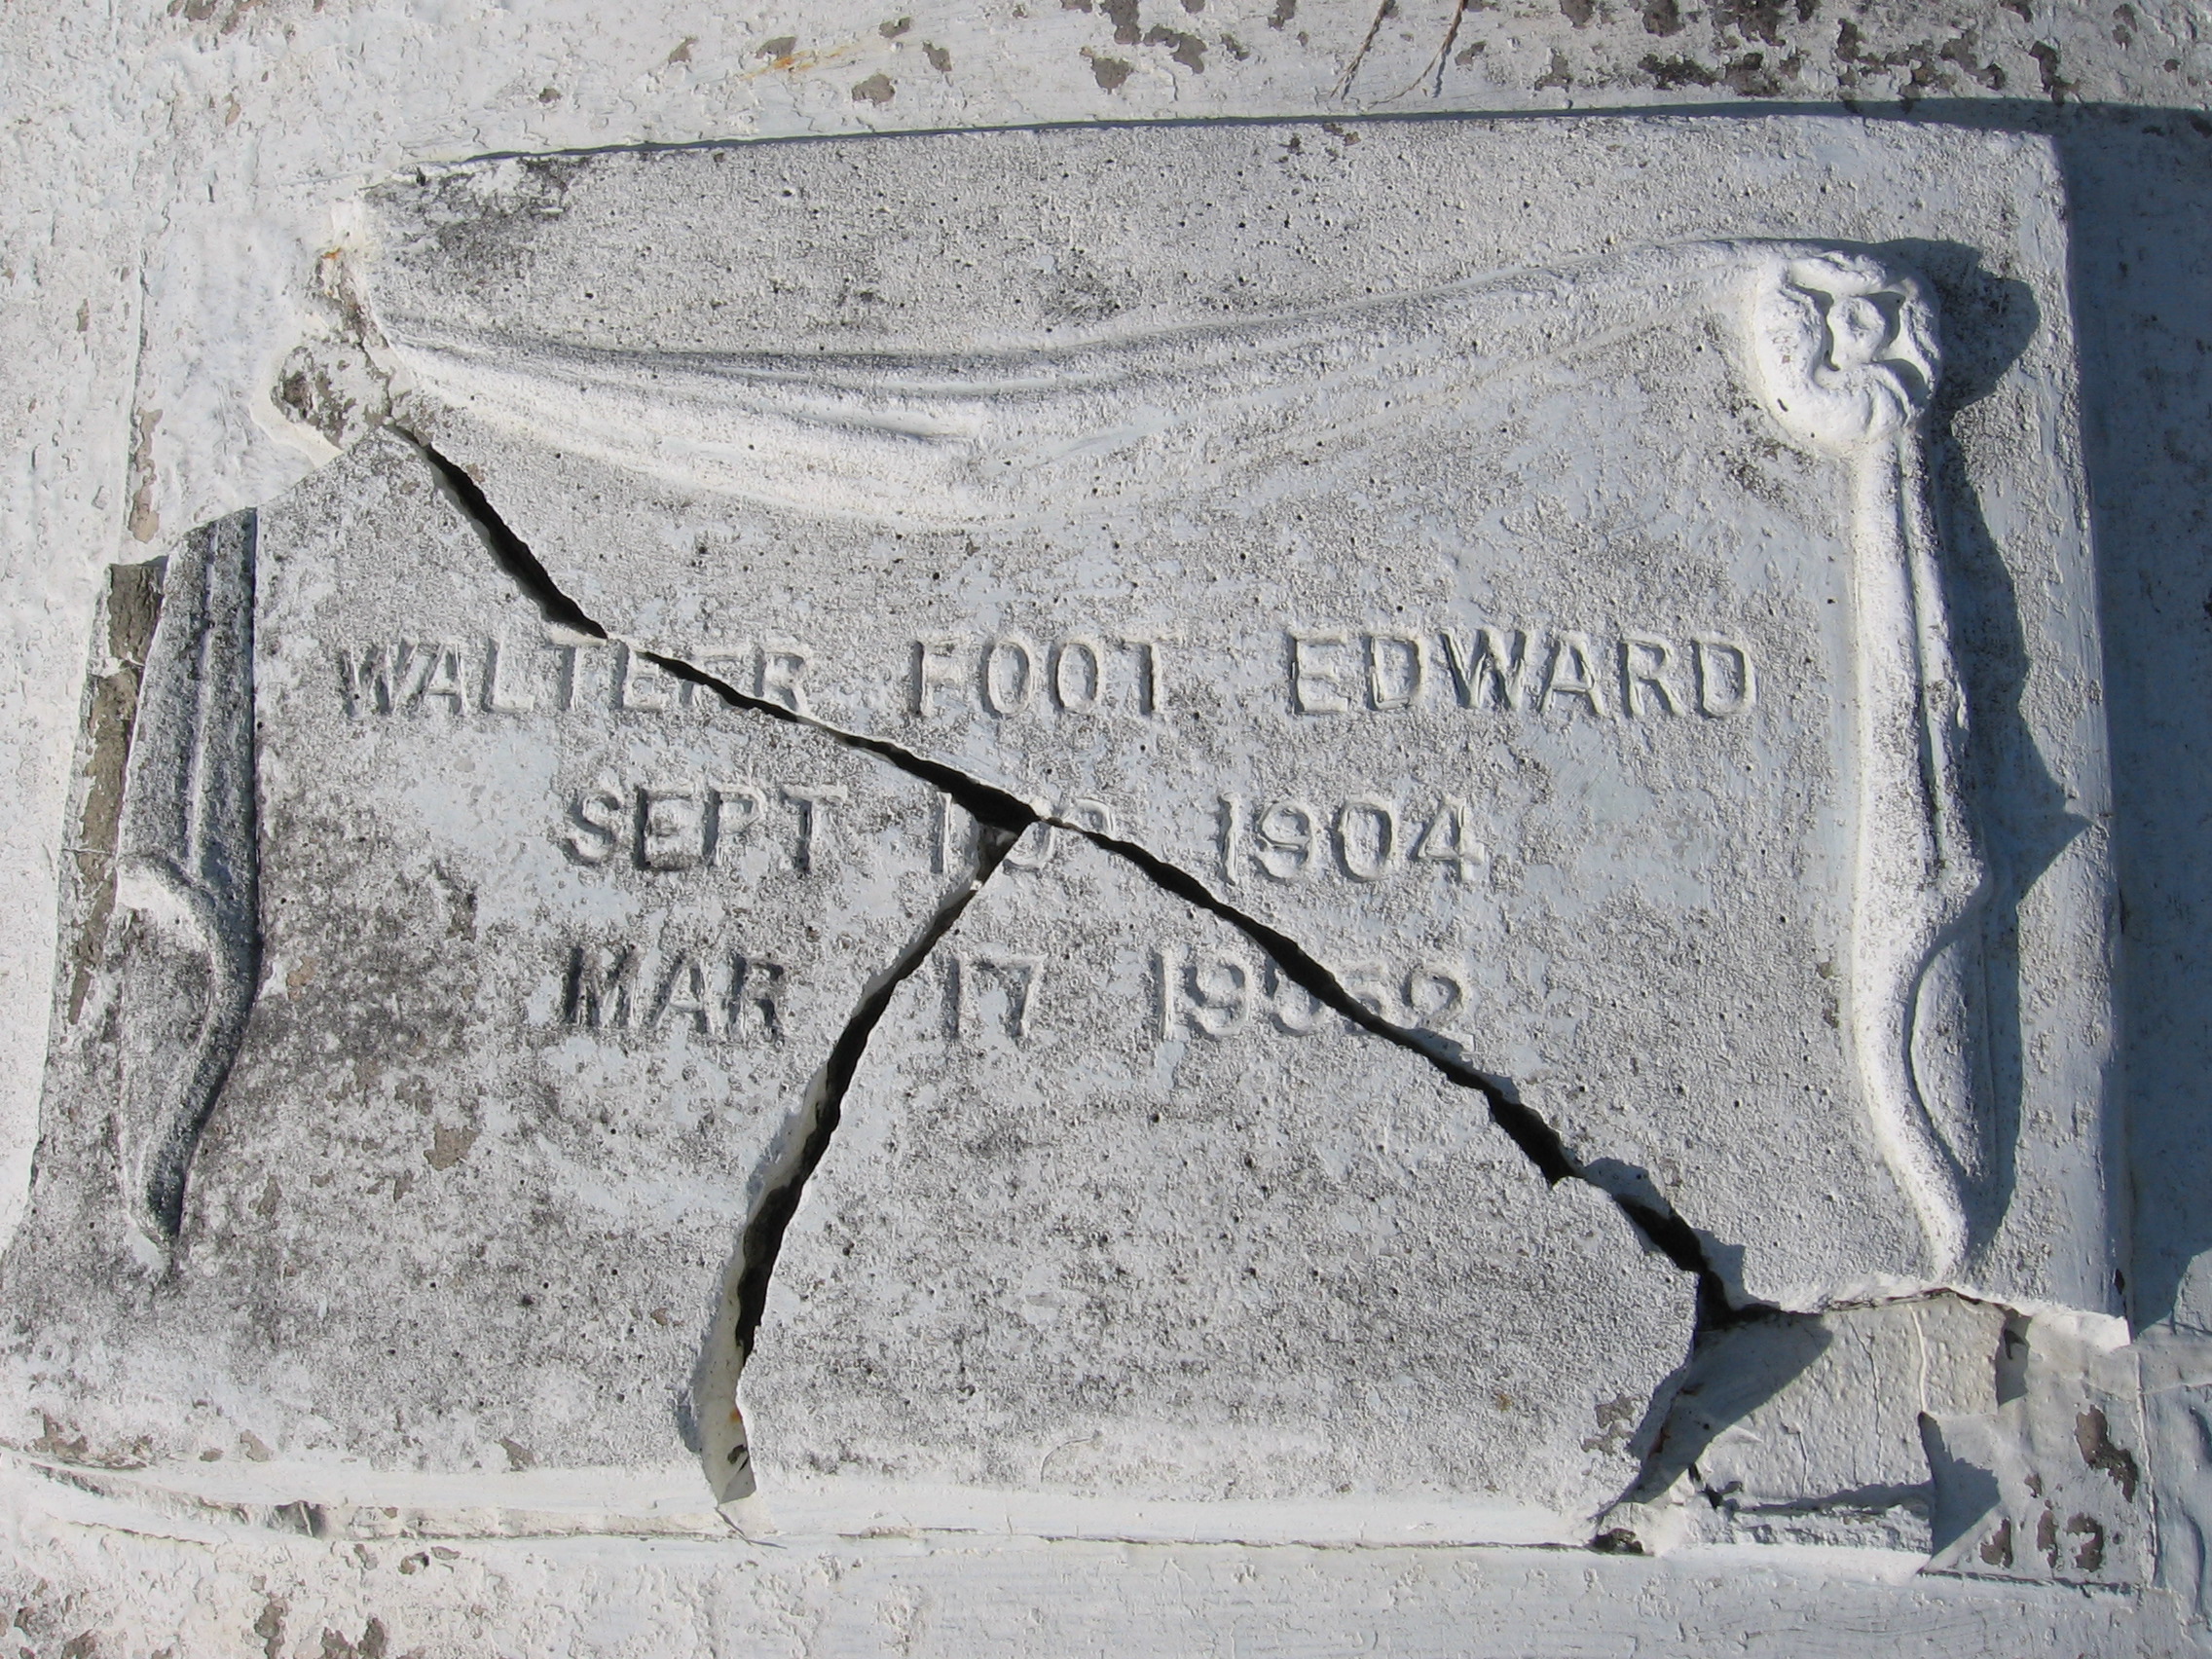 Walter Foot Edward